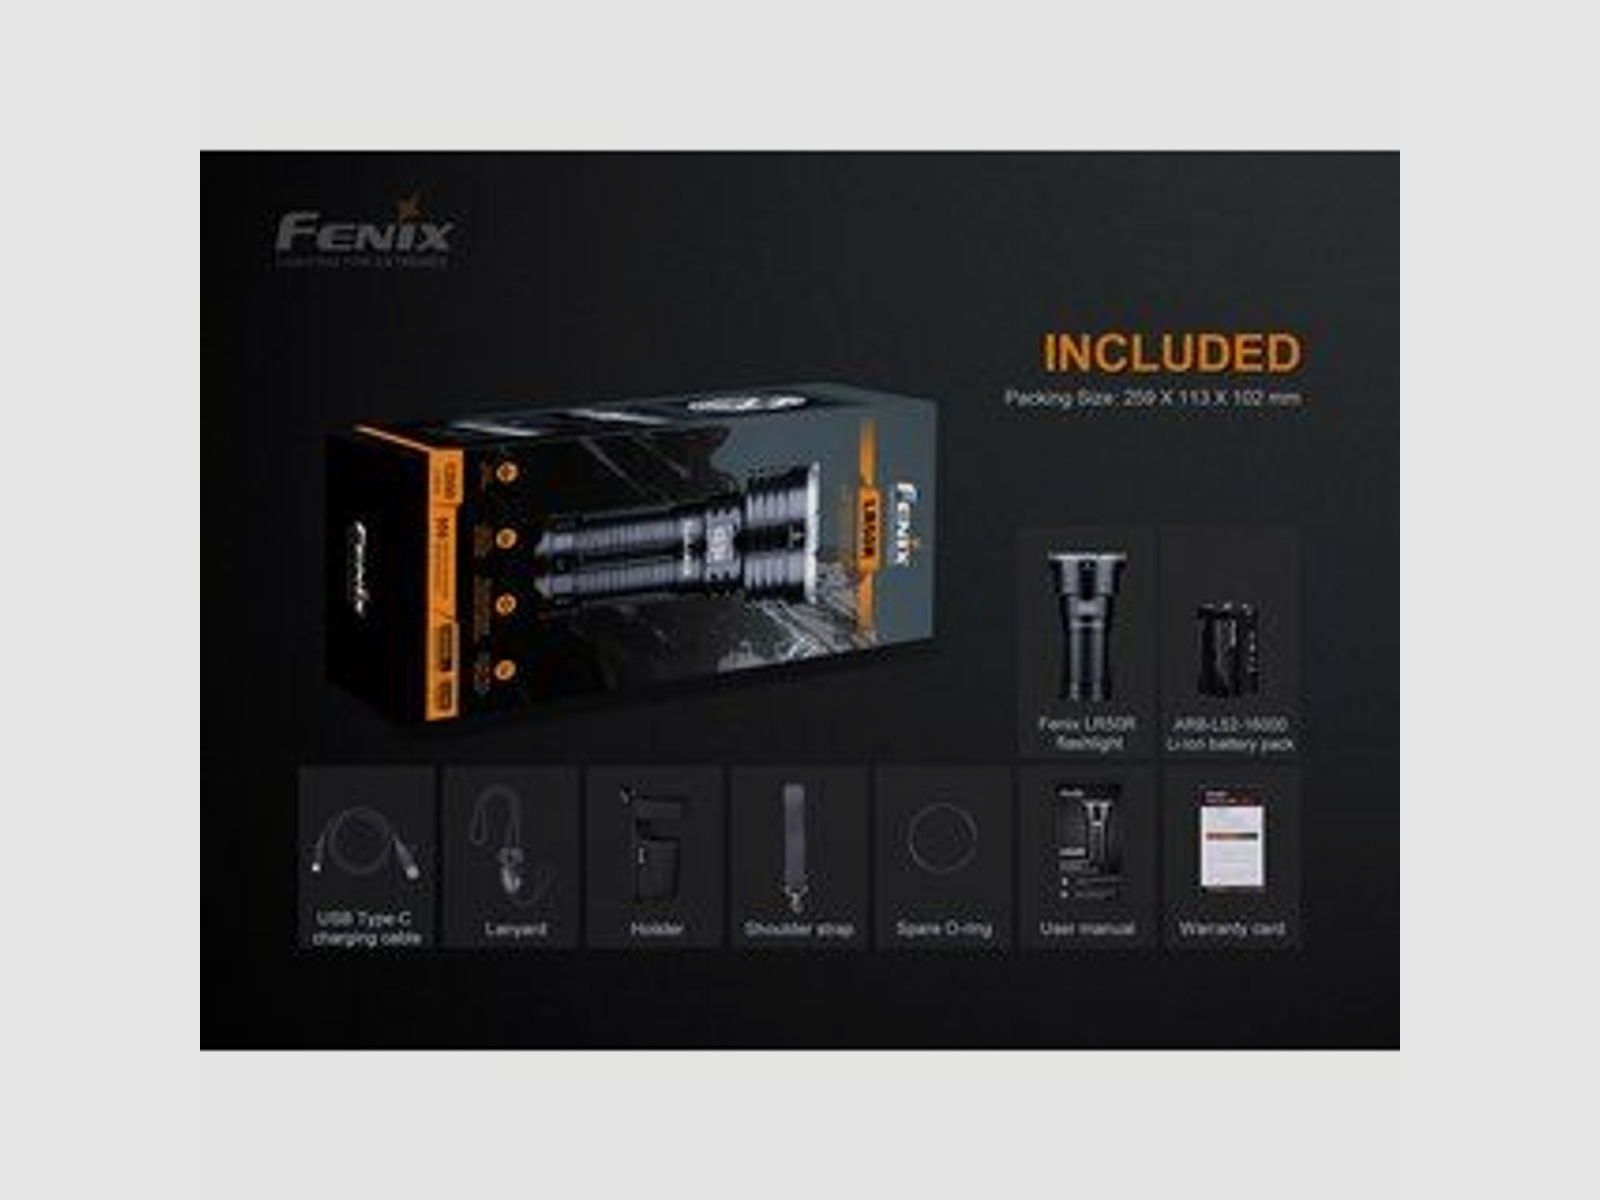 Fenix	 LR50R LED Taschenlampe